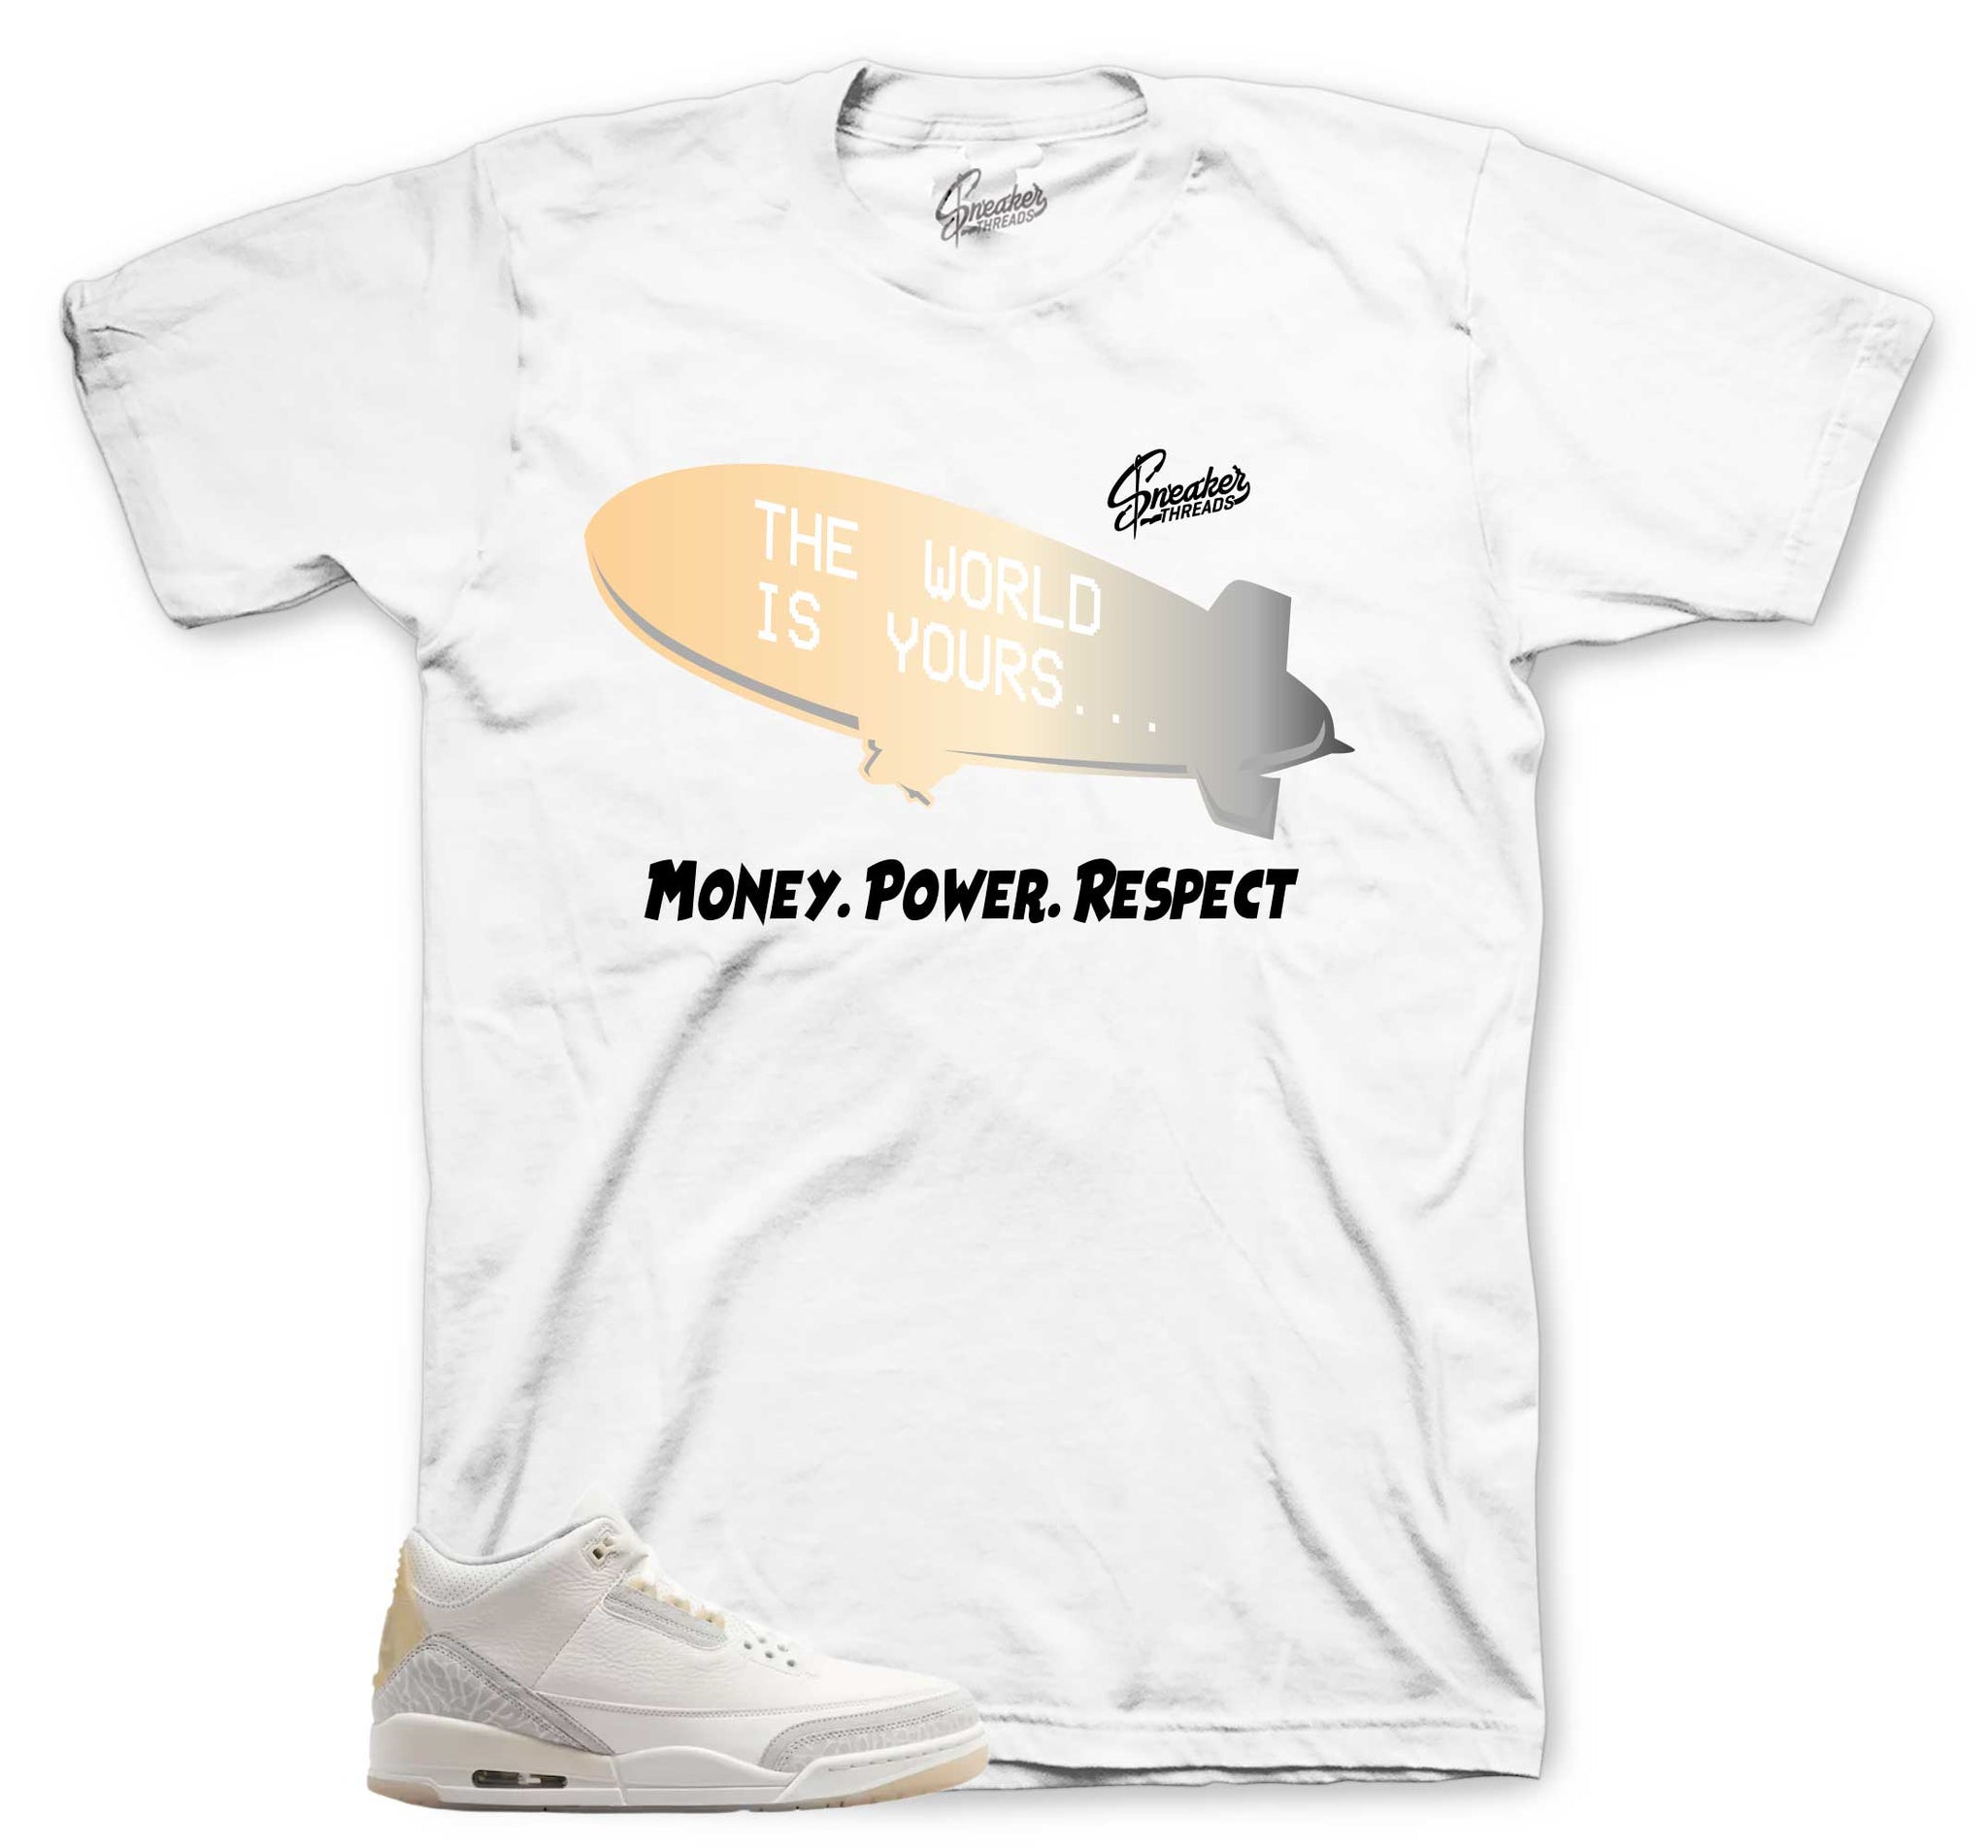 Retro 3 Ivory Shirt - Money Power Respect - White